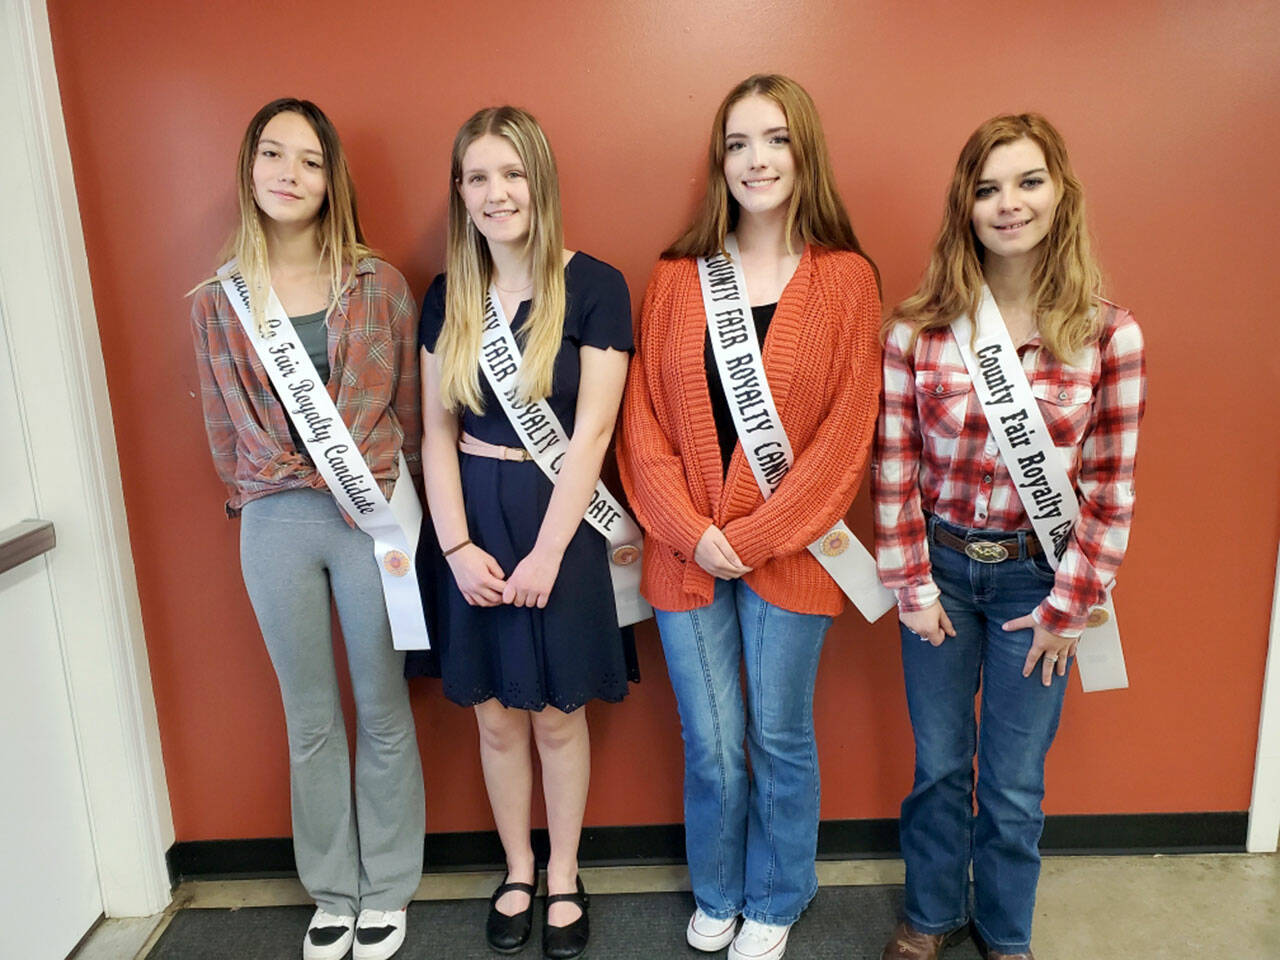 Clallam County Fair royality candidates are, from left, Kaylyn Baerg, Brooklyn McKnight, Aliya Gillett and Olivia Ostlund.